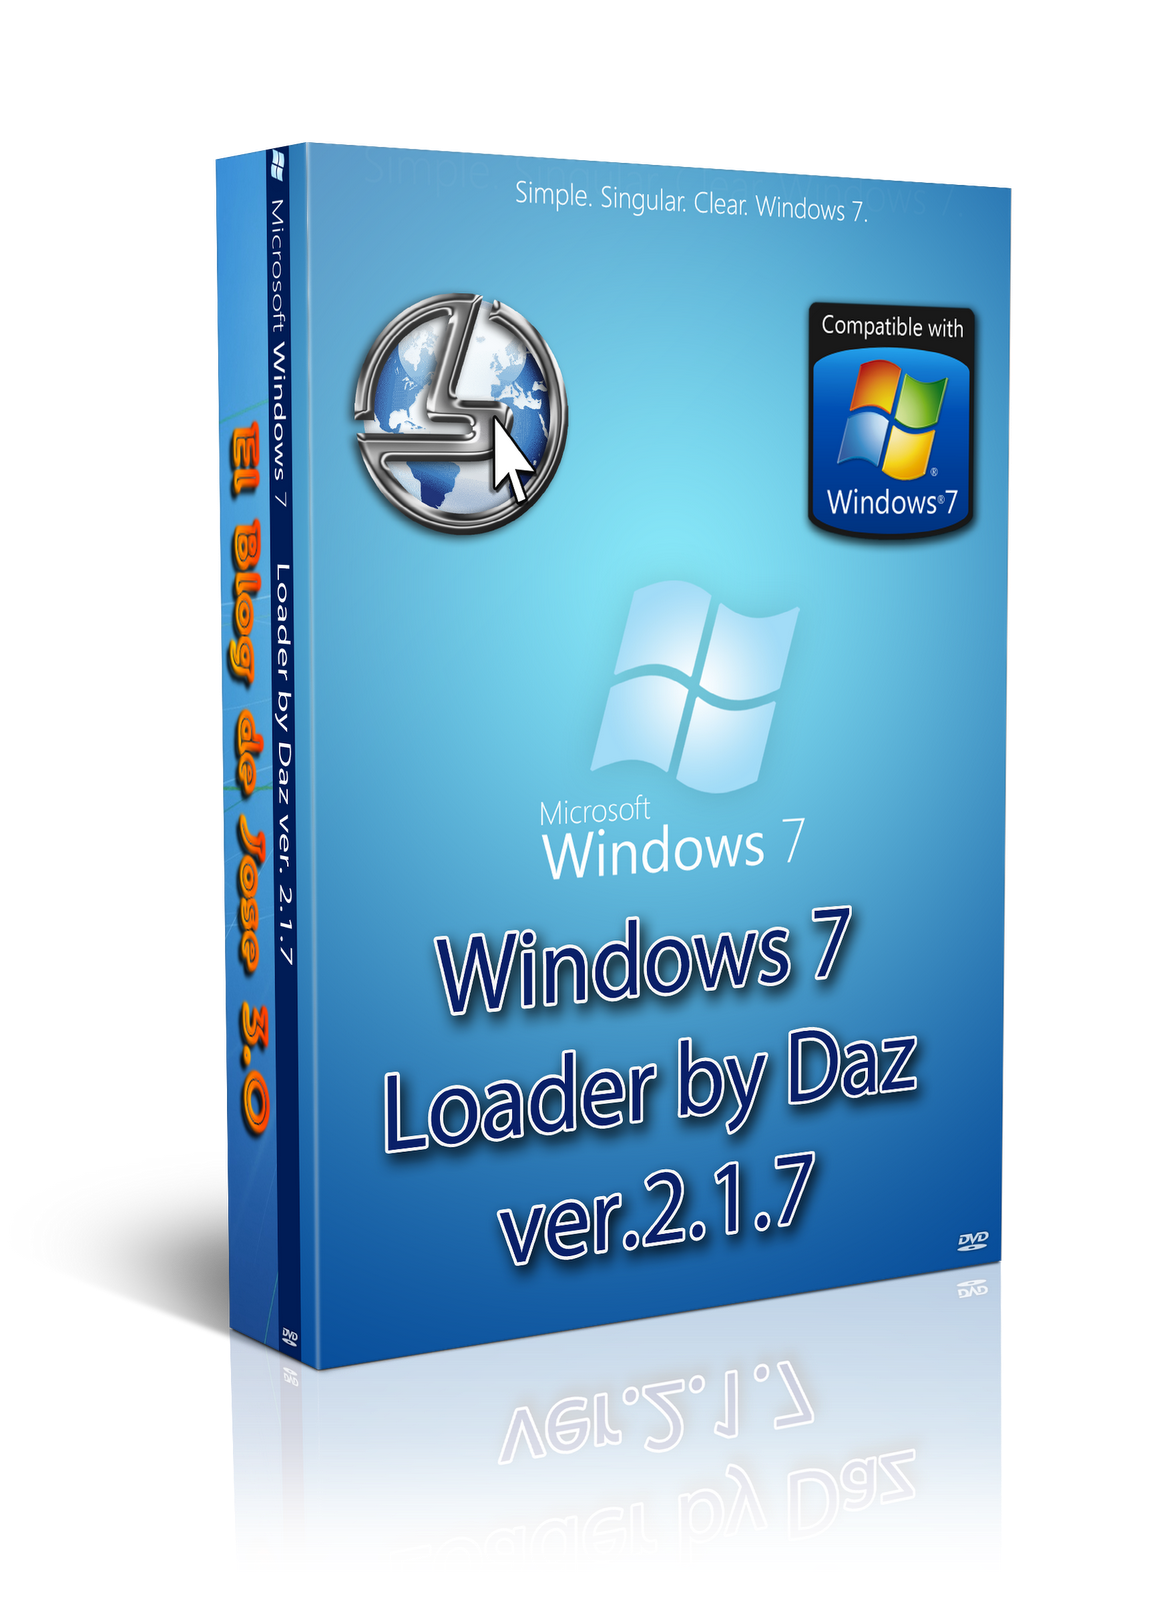 Активатор 7 loader. Виндовс лоадер. Windows 7 Loader by Daz. Активатор Windows 7 Loader by Daz. Win 7 активатор Daz.